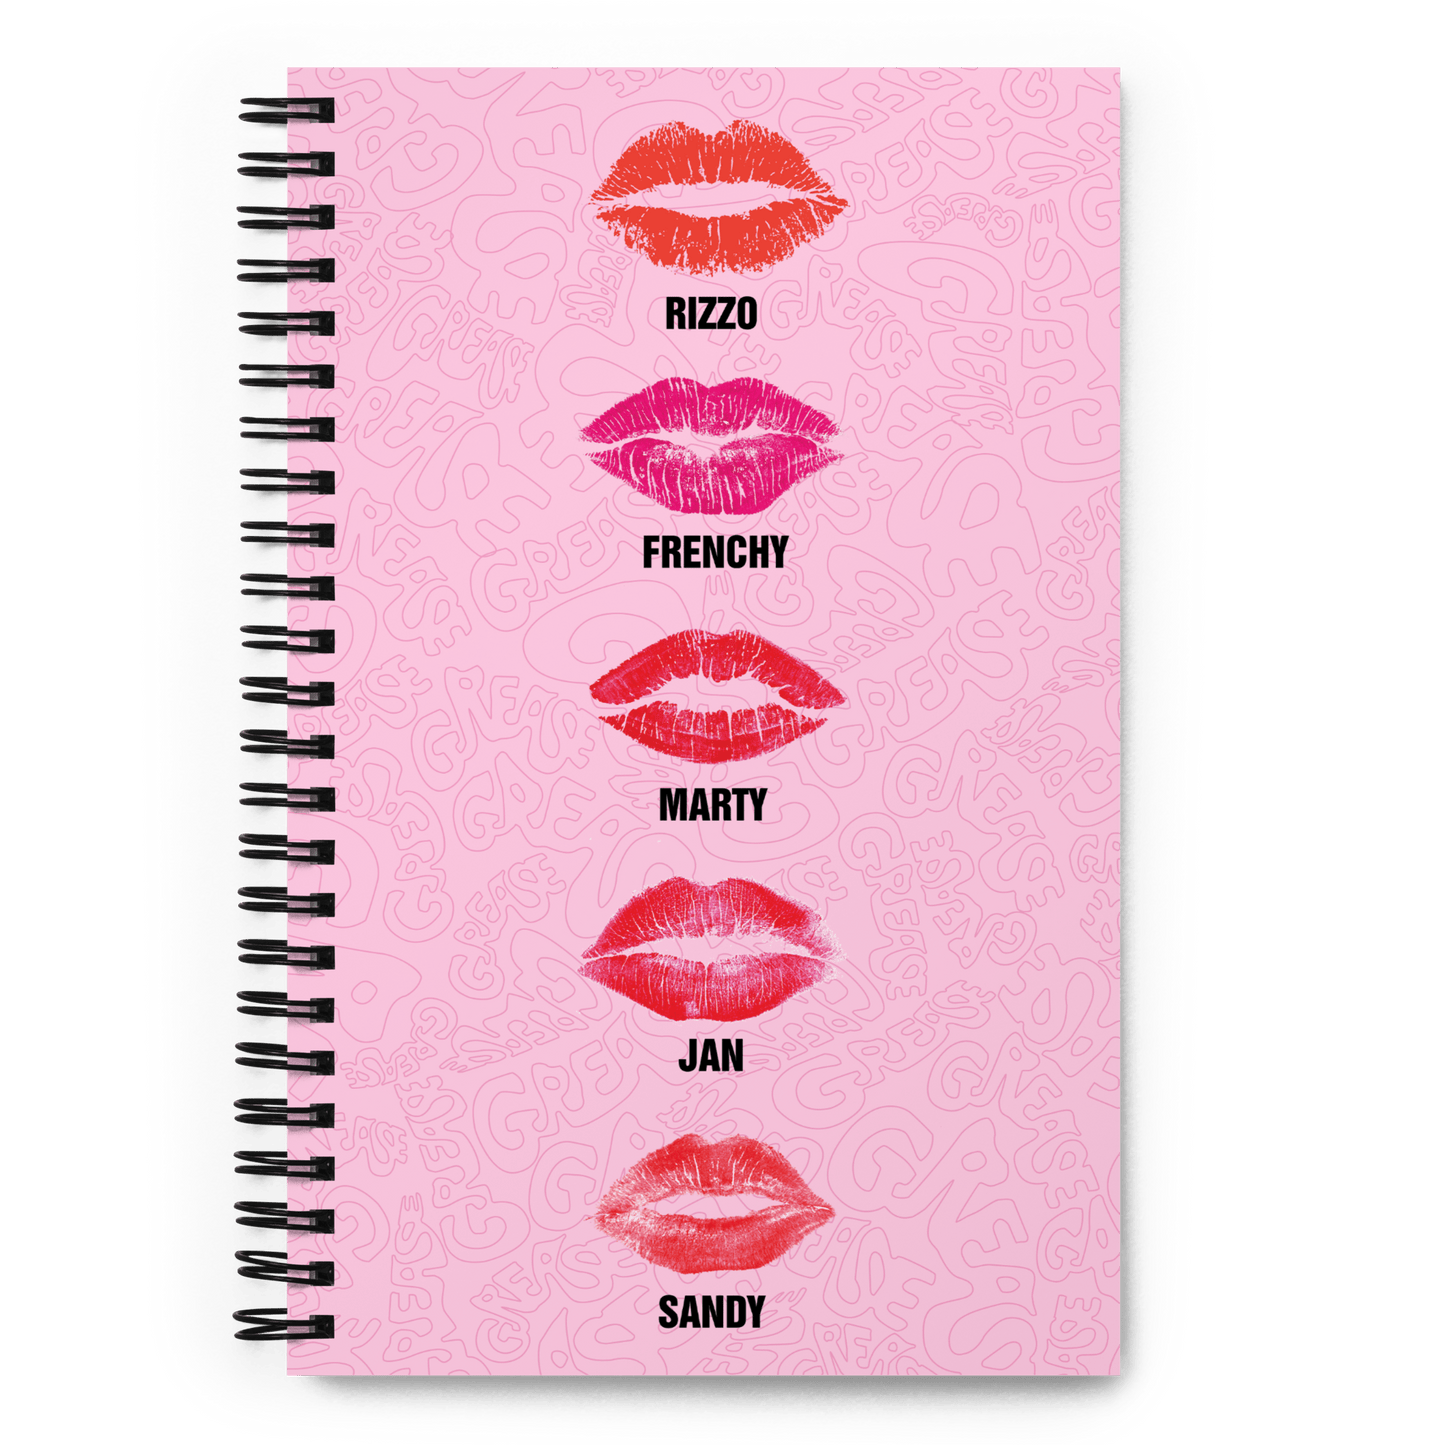 Grease Pink Ladies Kisses Spiral Notebook - Paramount Shop